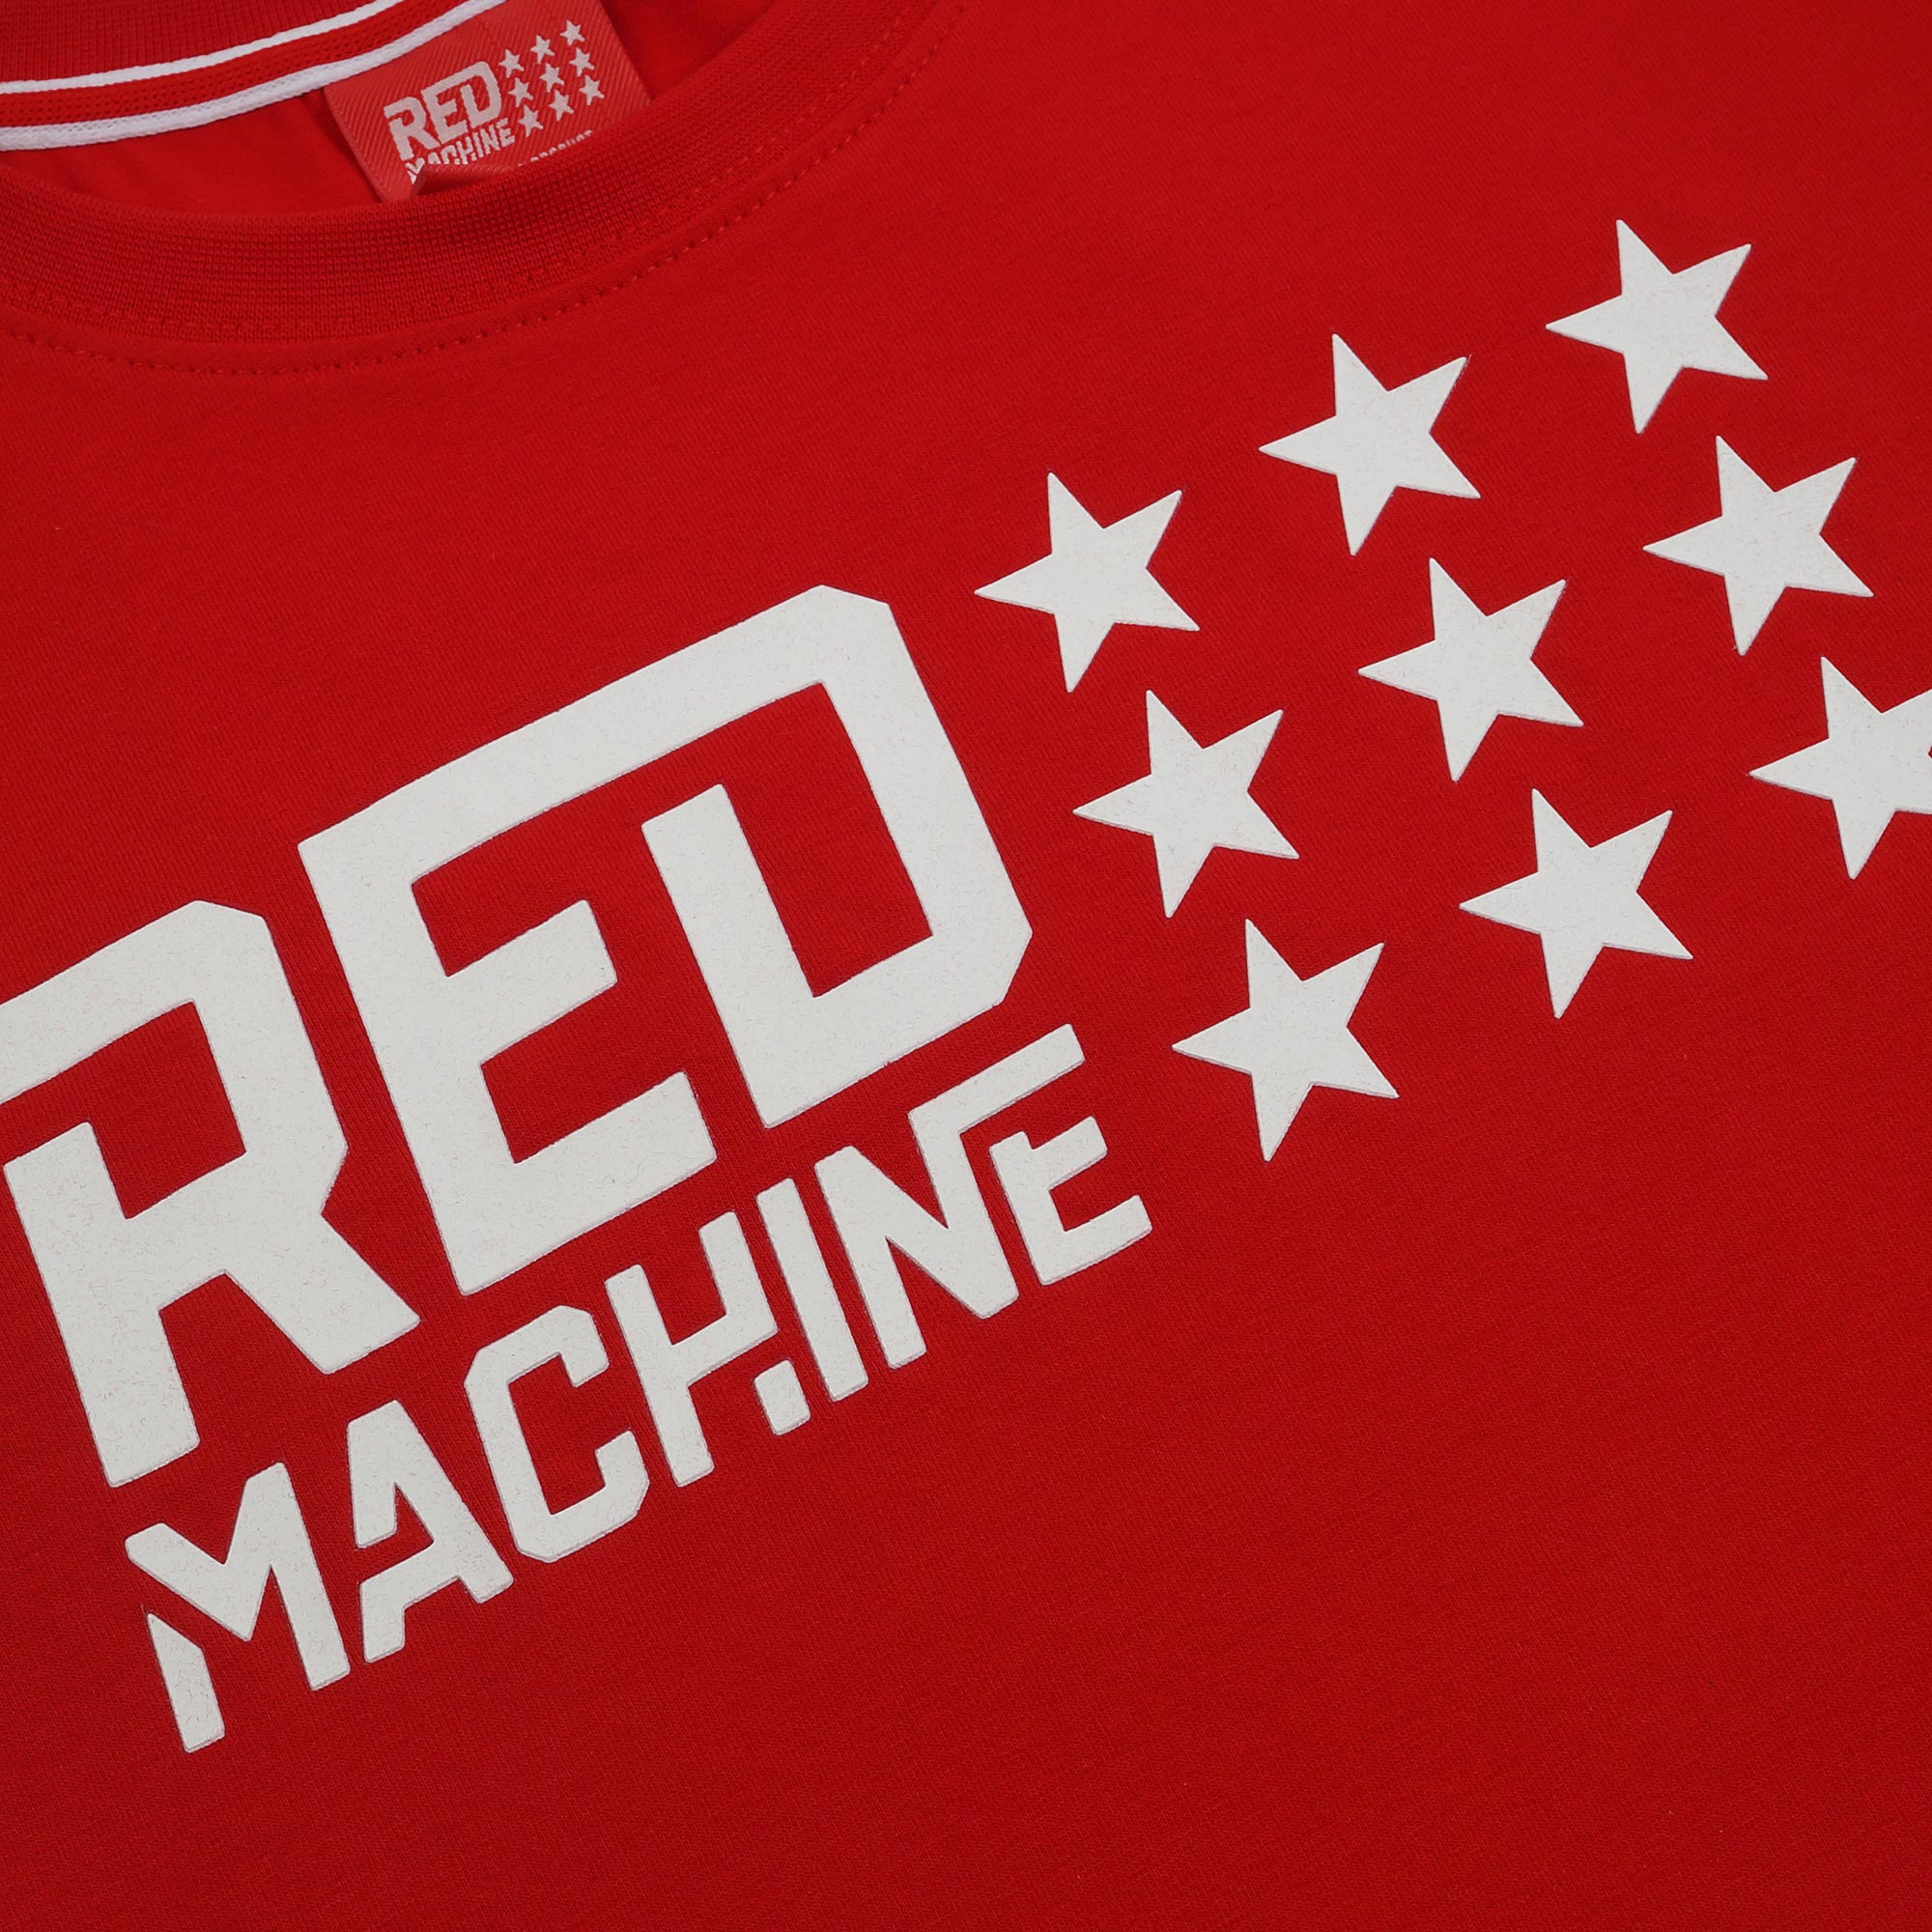 Футболка женская красная "Red Machine. 9 звезд"